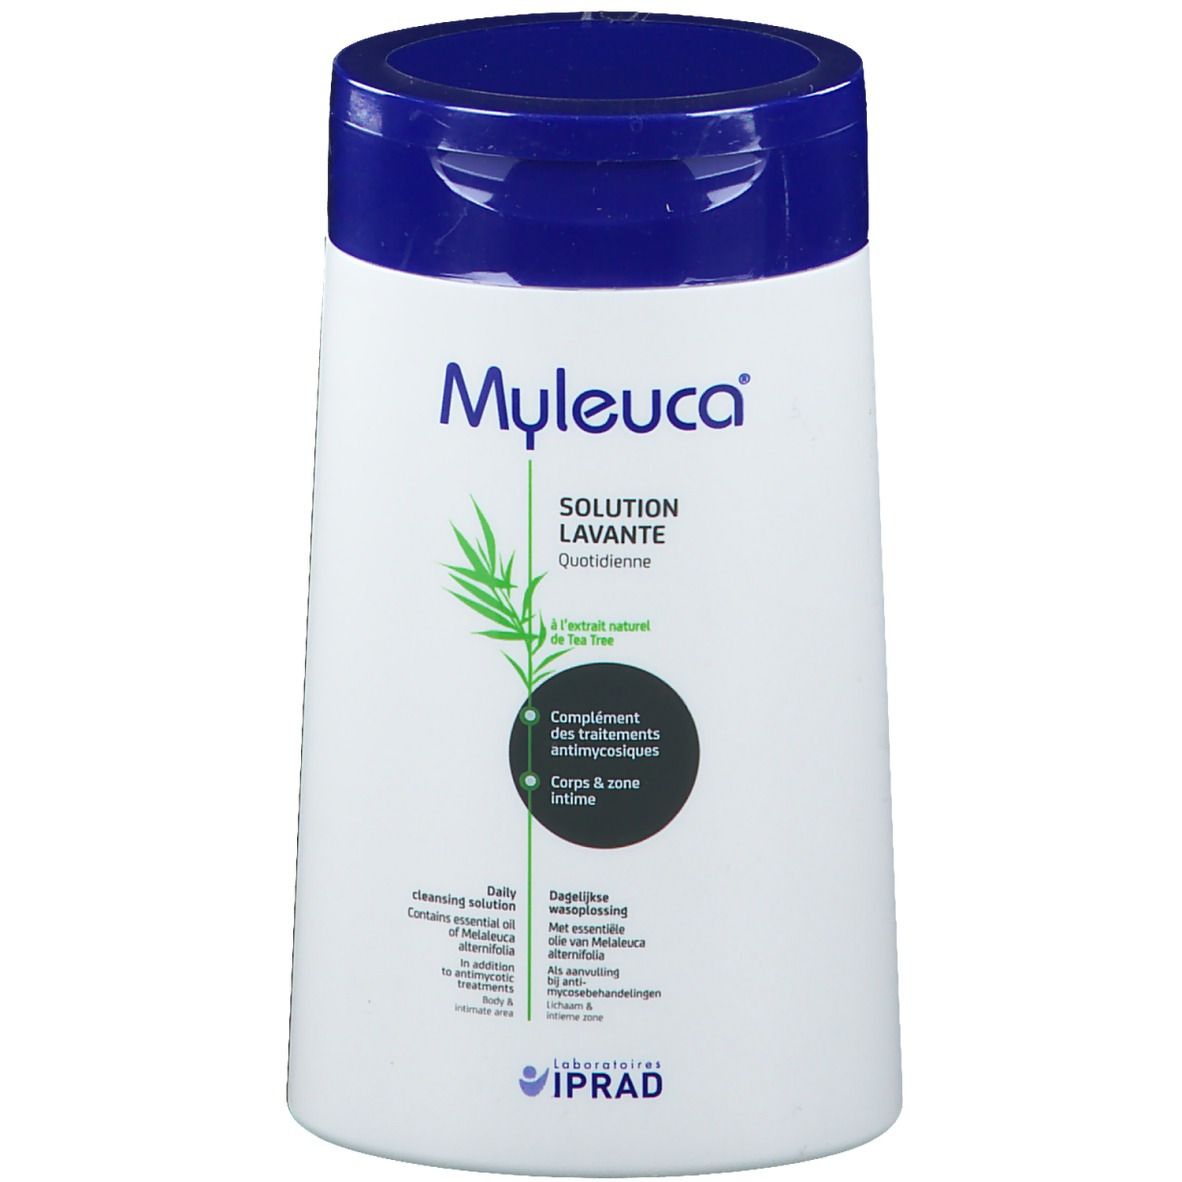 Myleuca® Solution Lavante